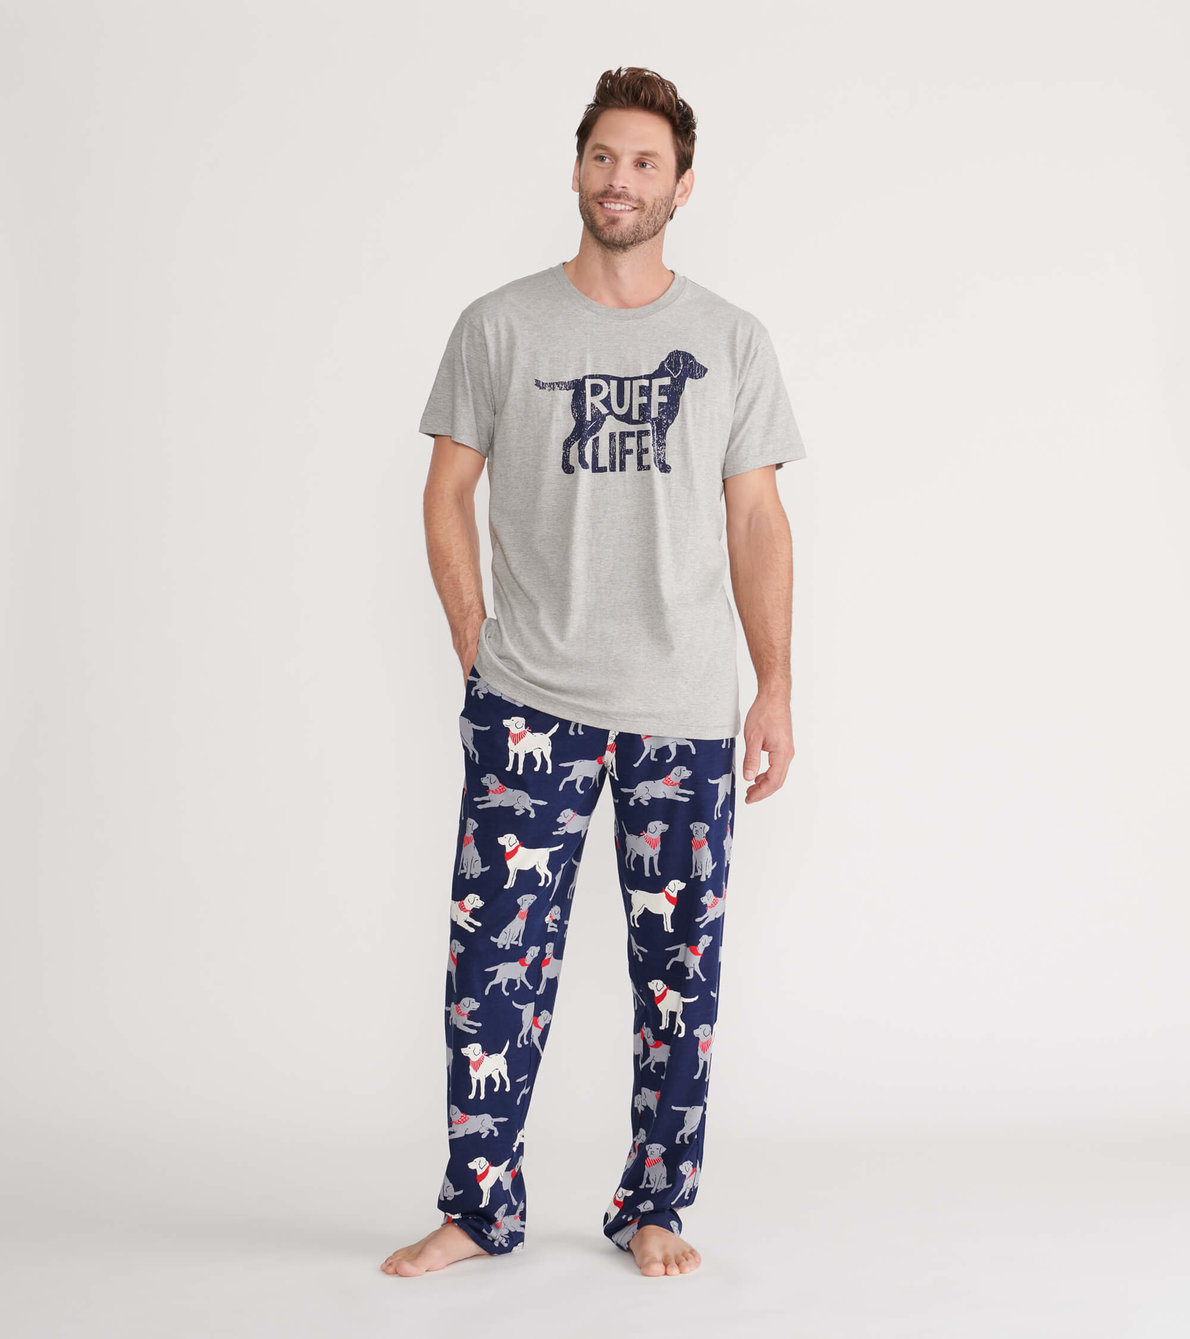 View larger image of Bandana Labs Men's Tee and Pants Pajama Separates